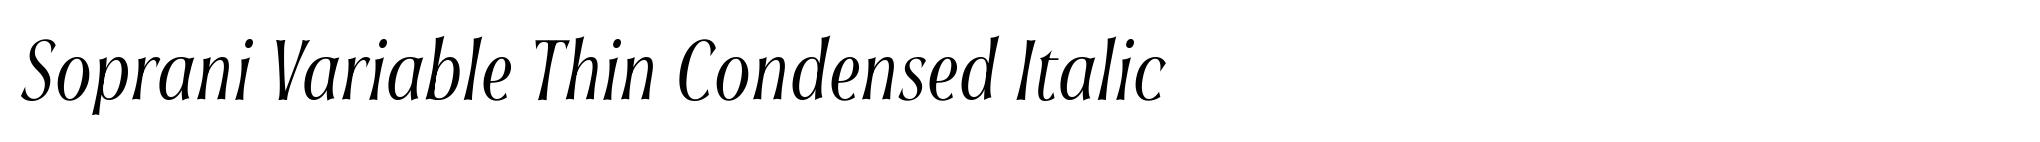 Soprani Variable Thin Condensed Italic image